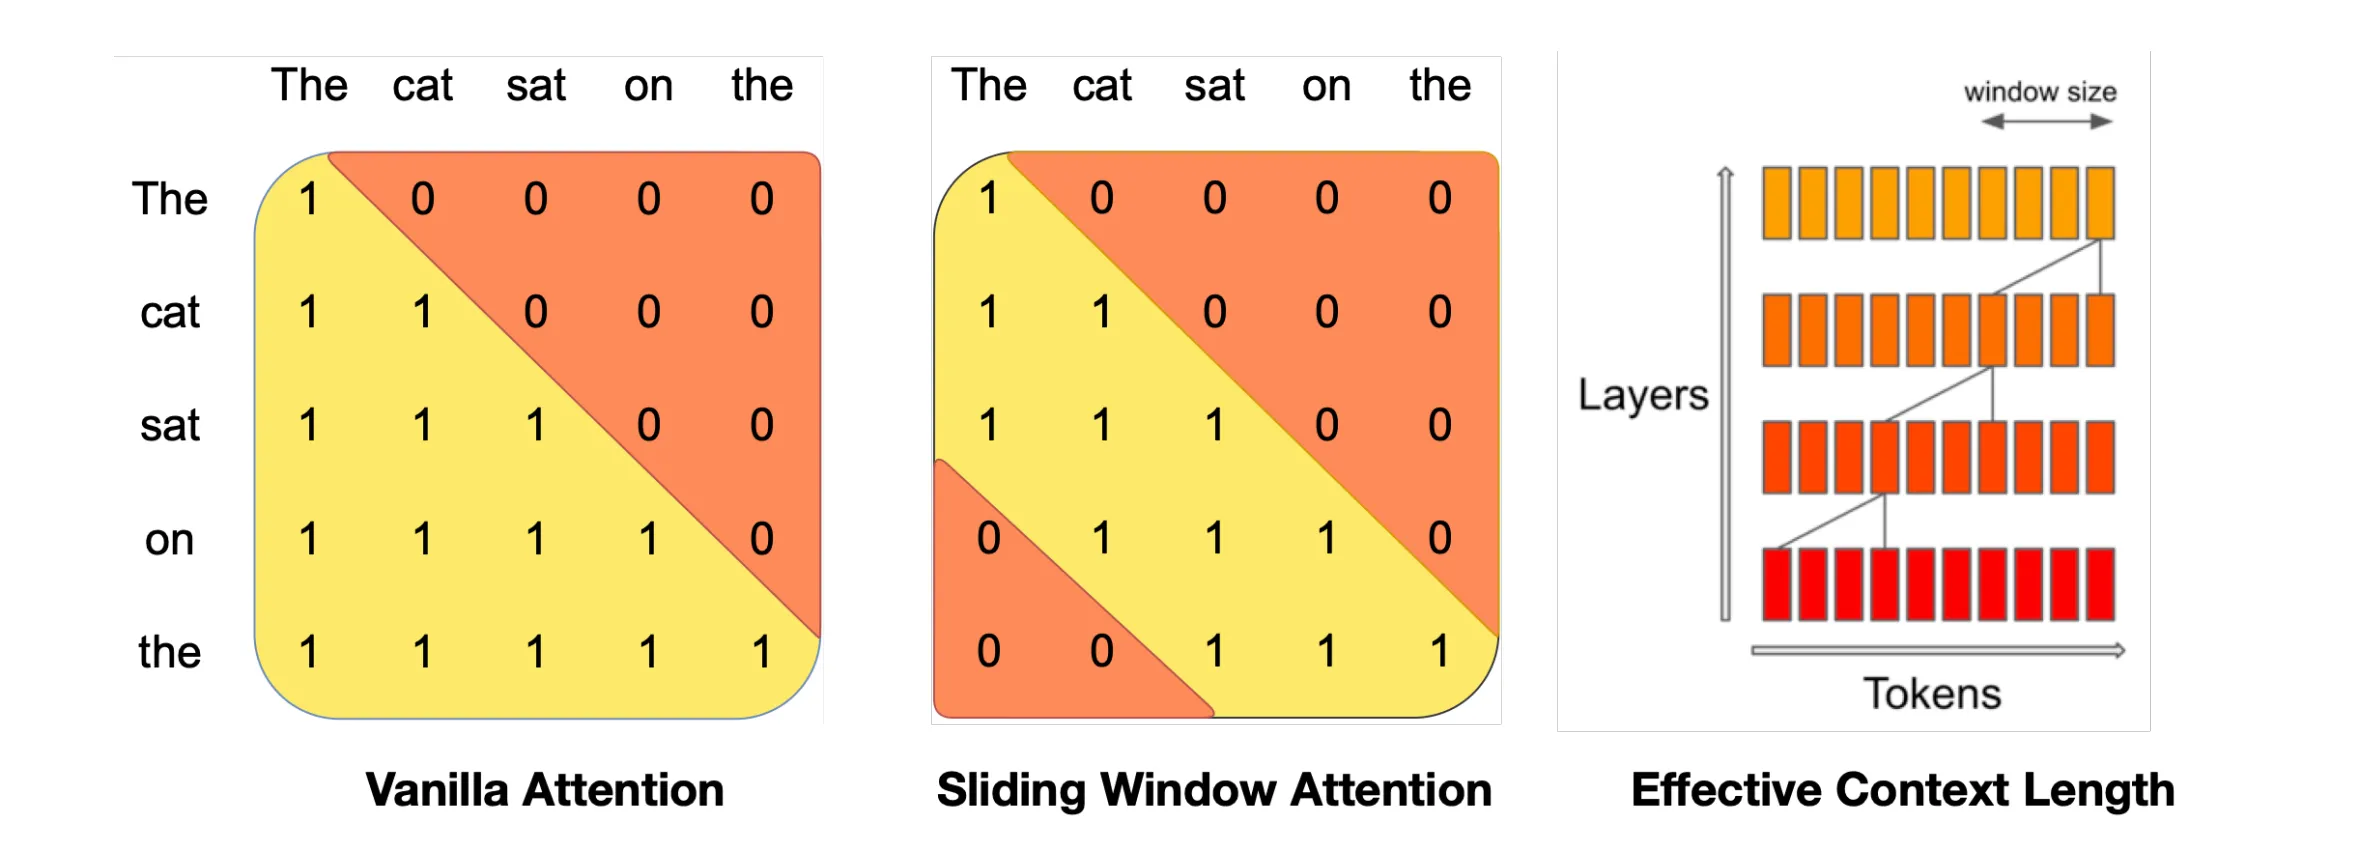 Sliding Window Attention